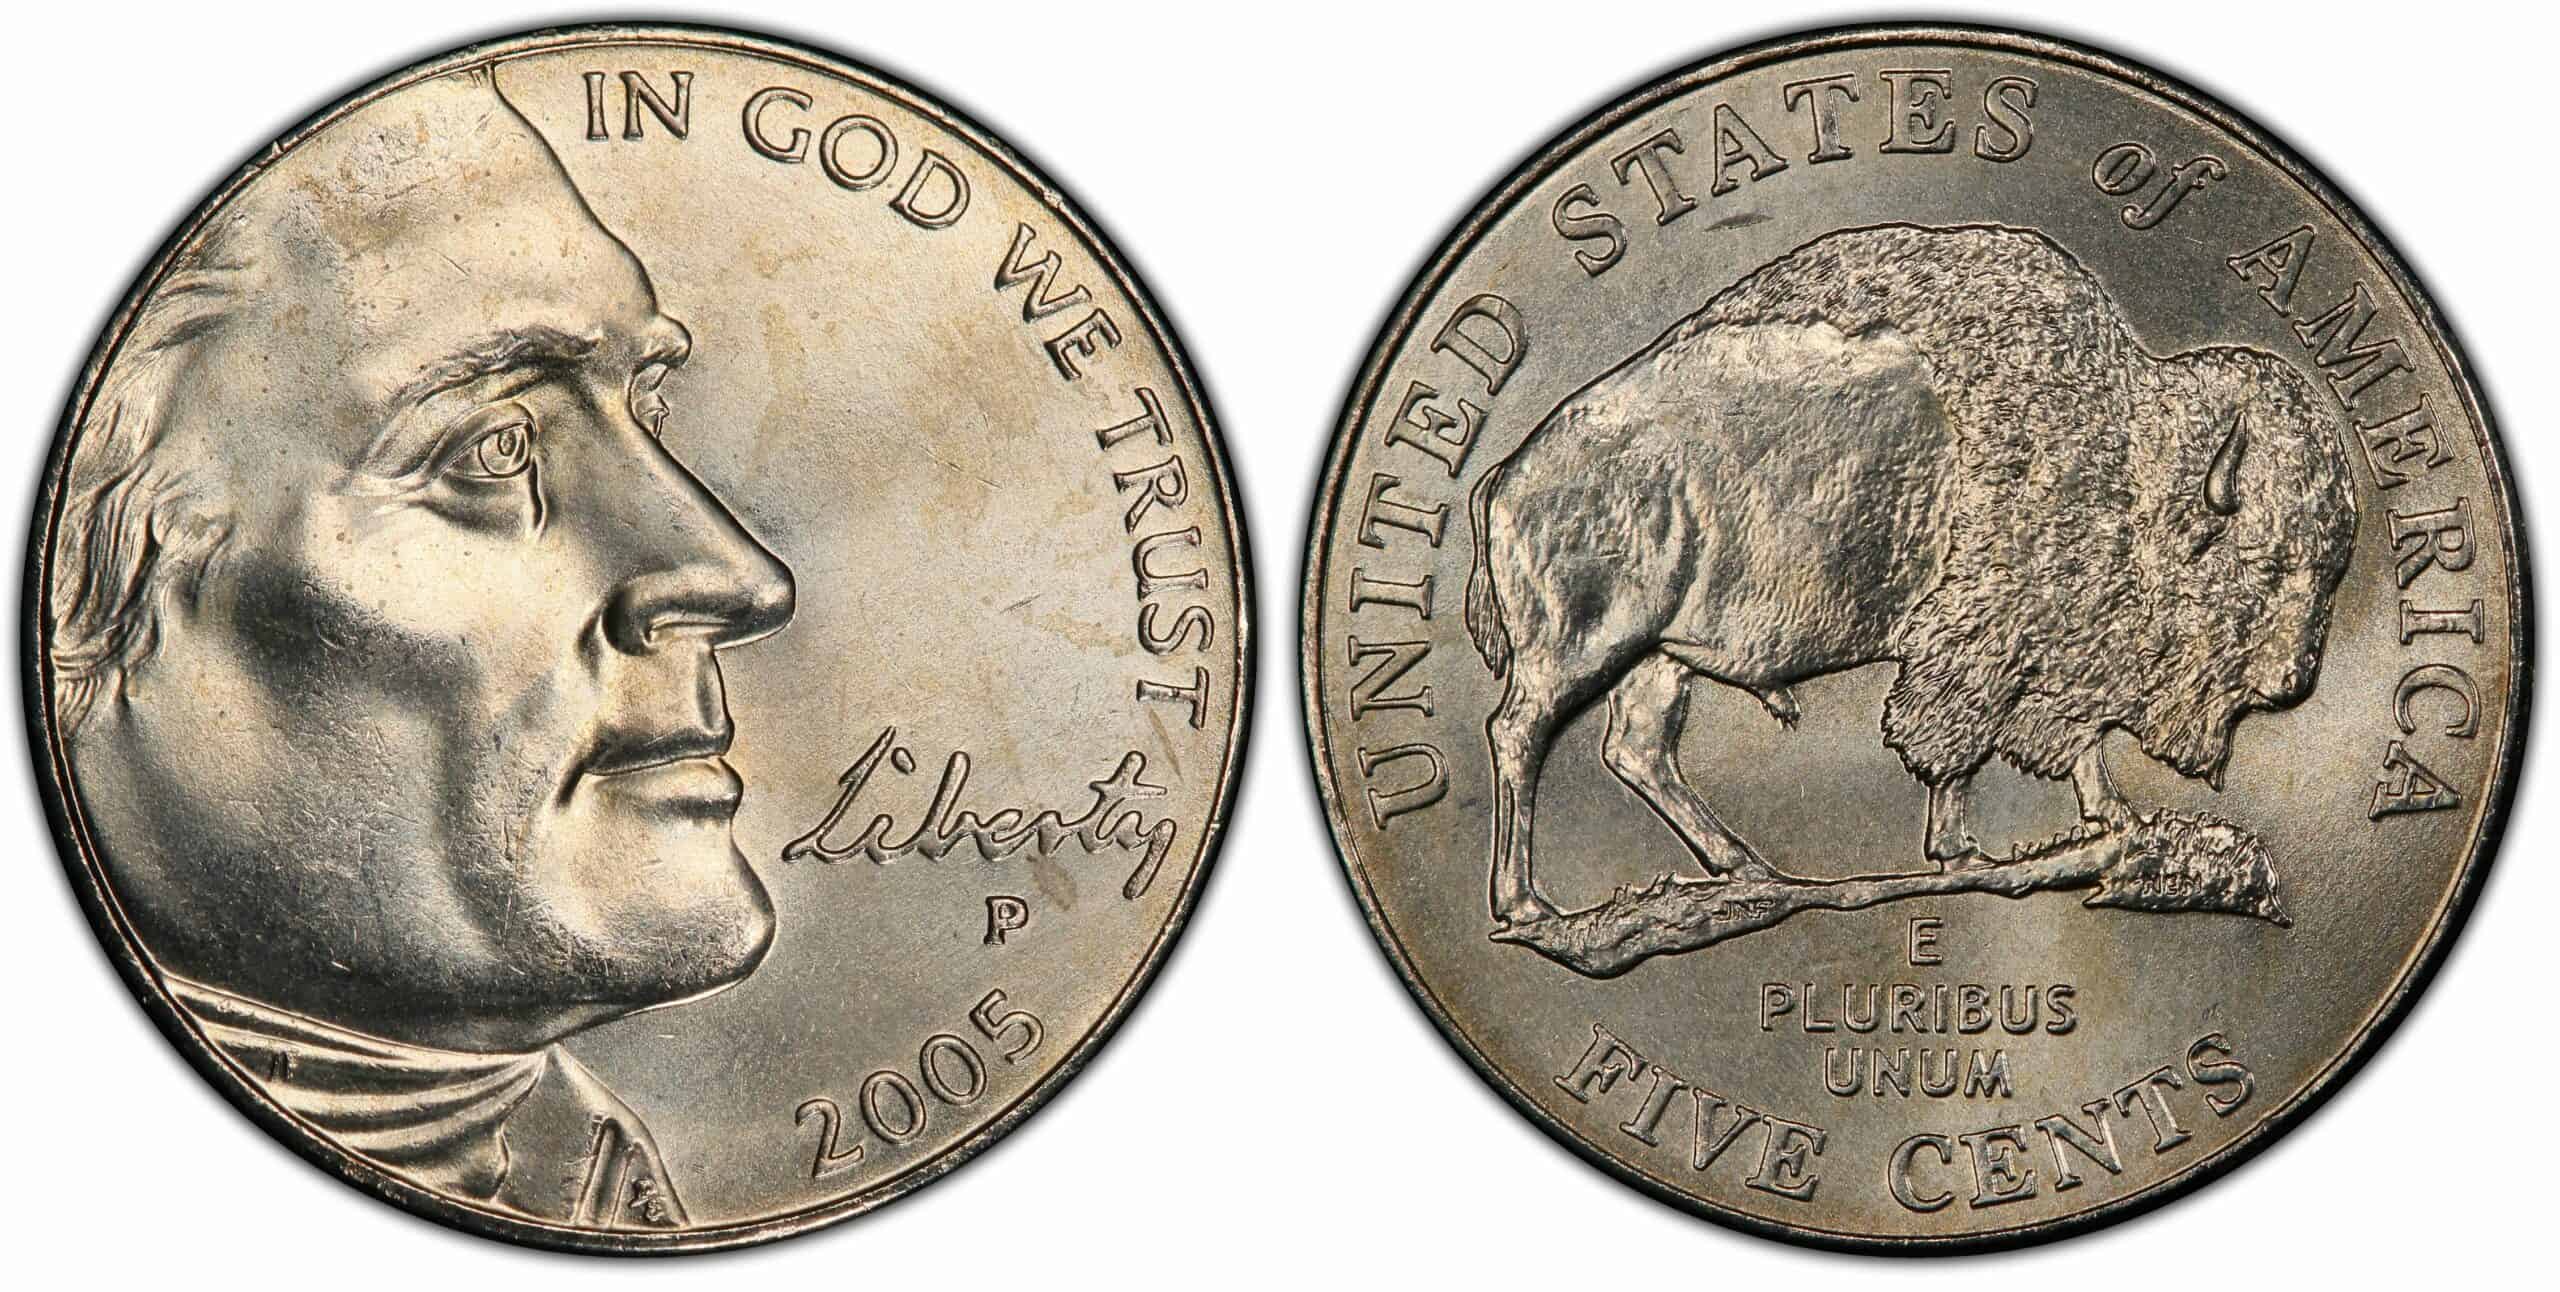 2005 P Buffalo nickel